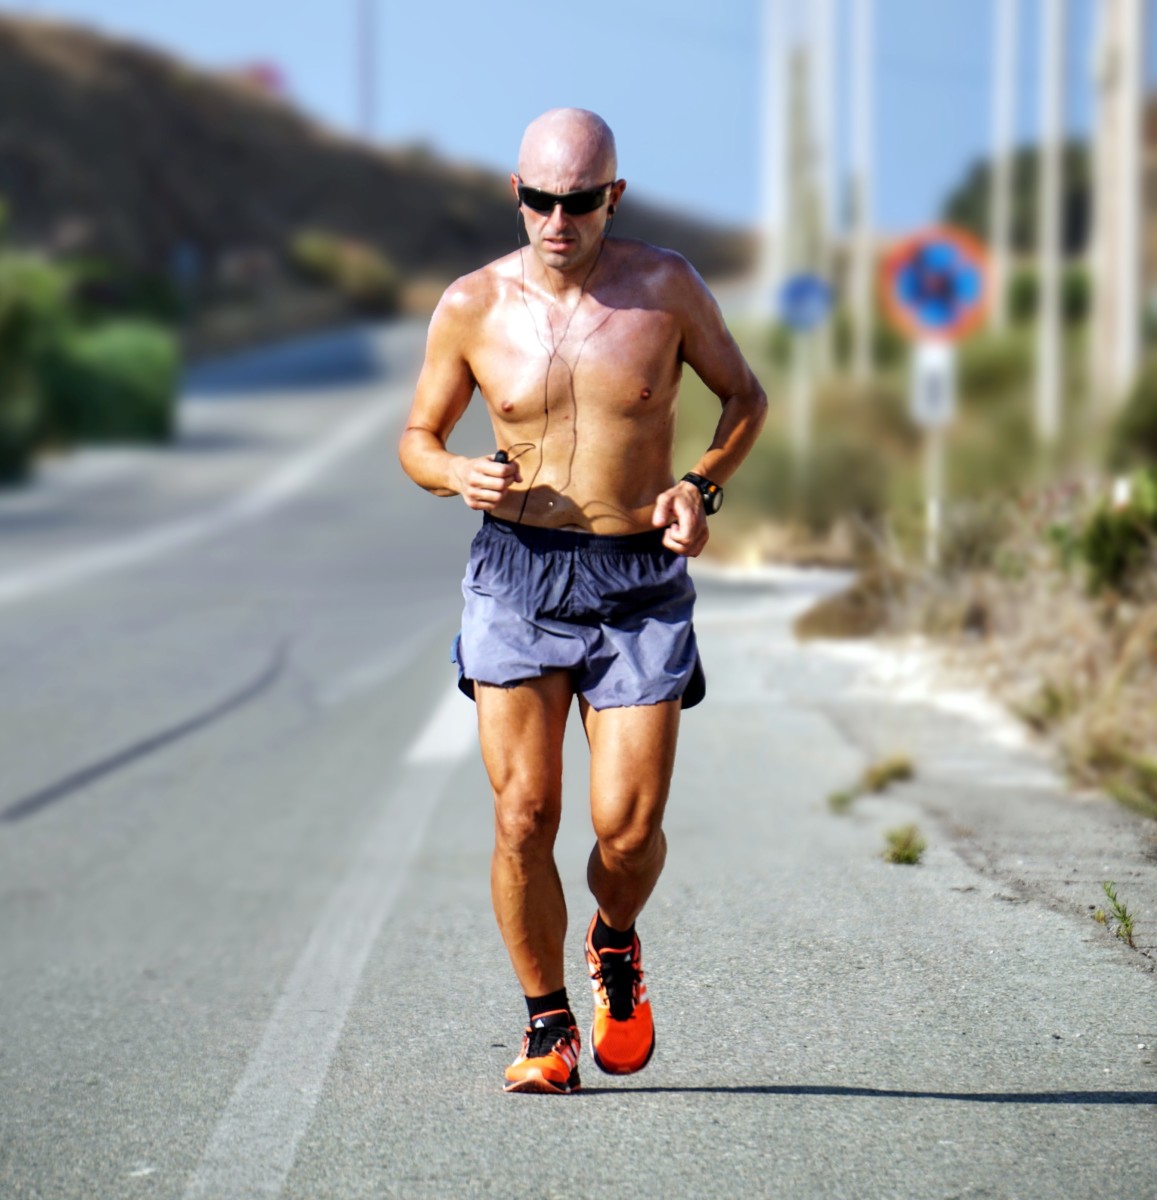 Male endurance athlete